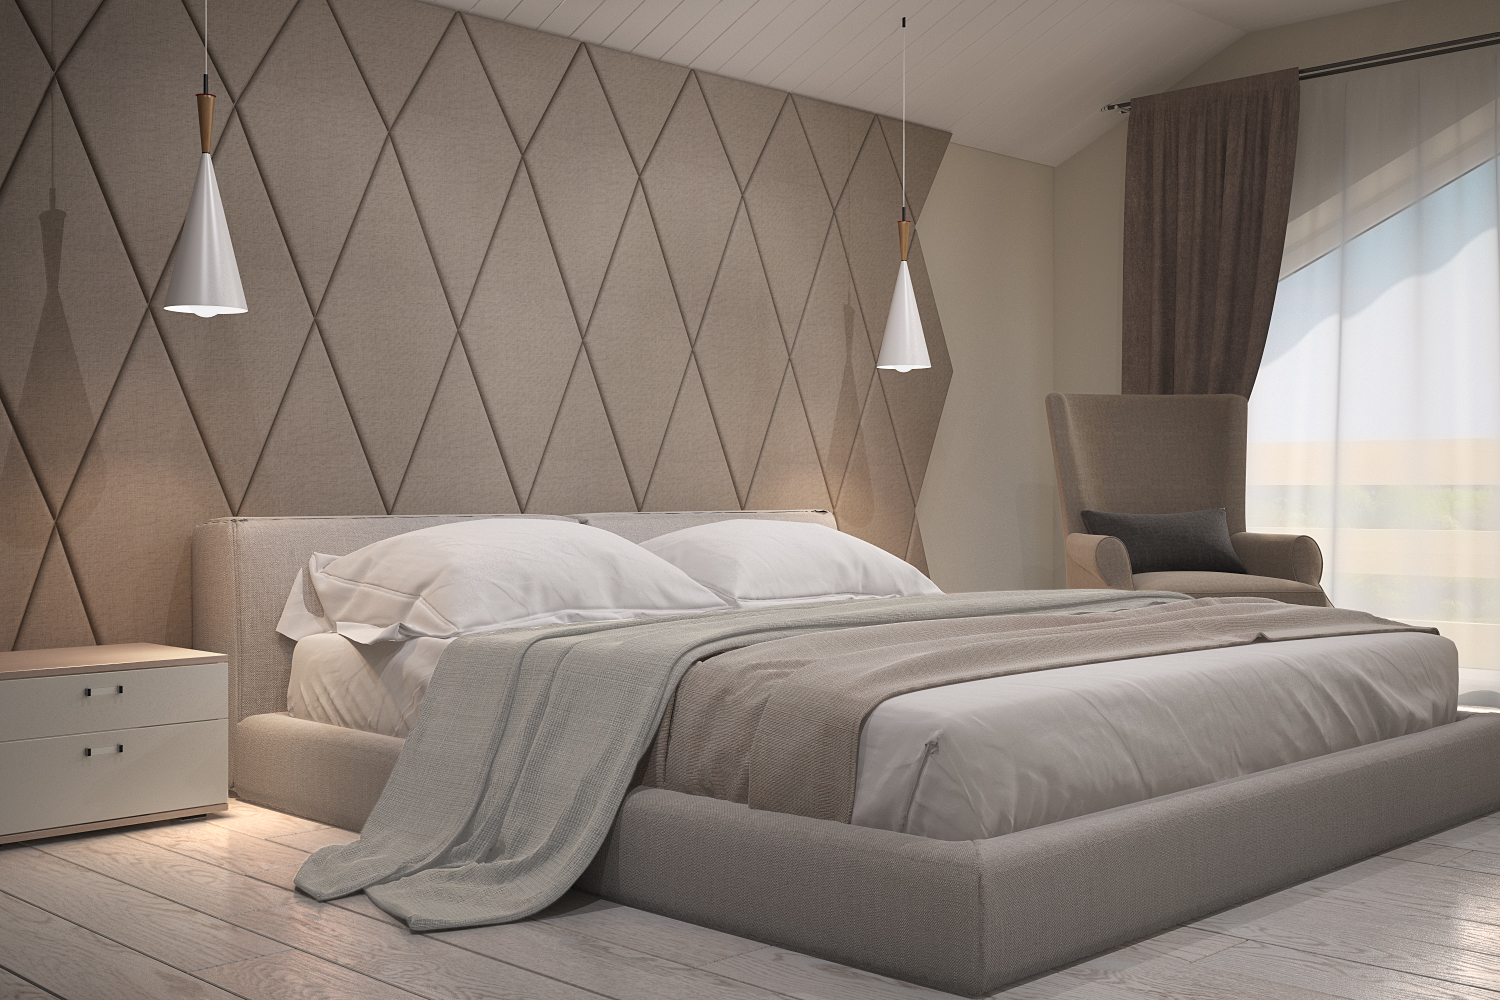 Bedroom in 3d max vray 3.0 image